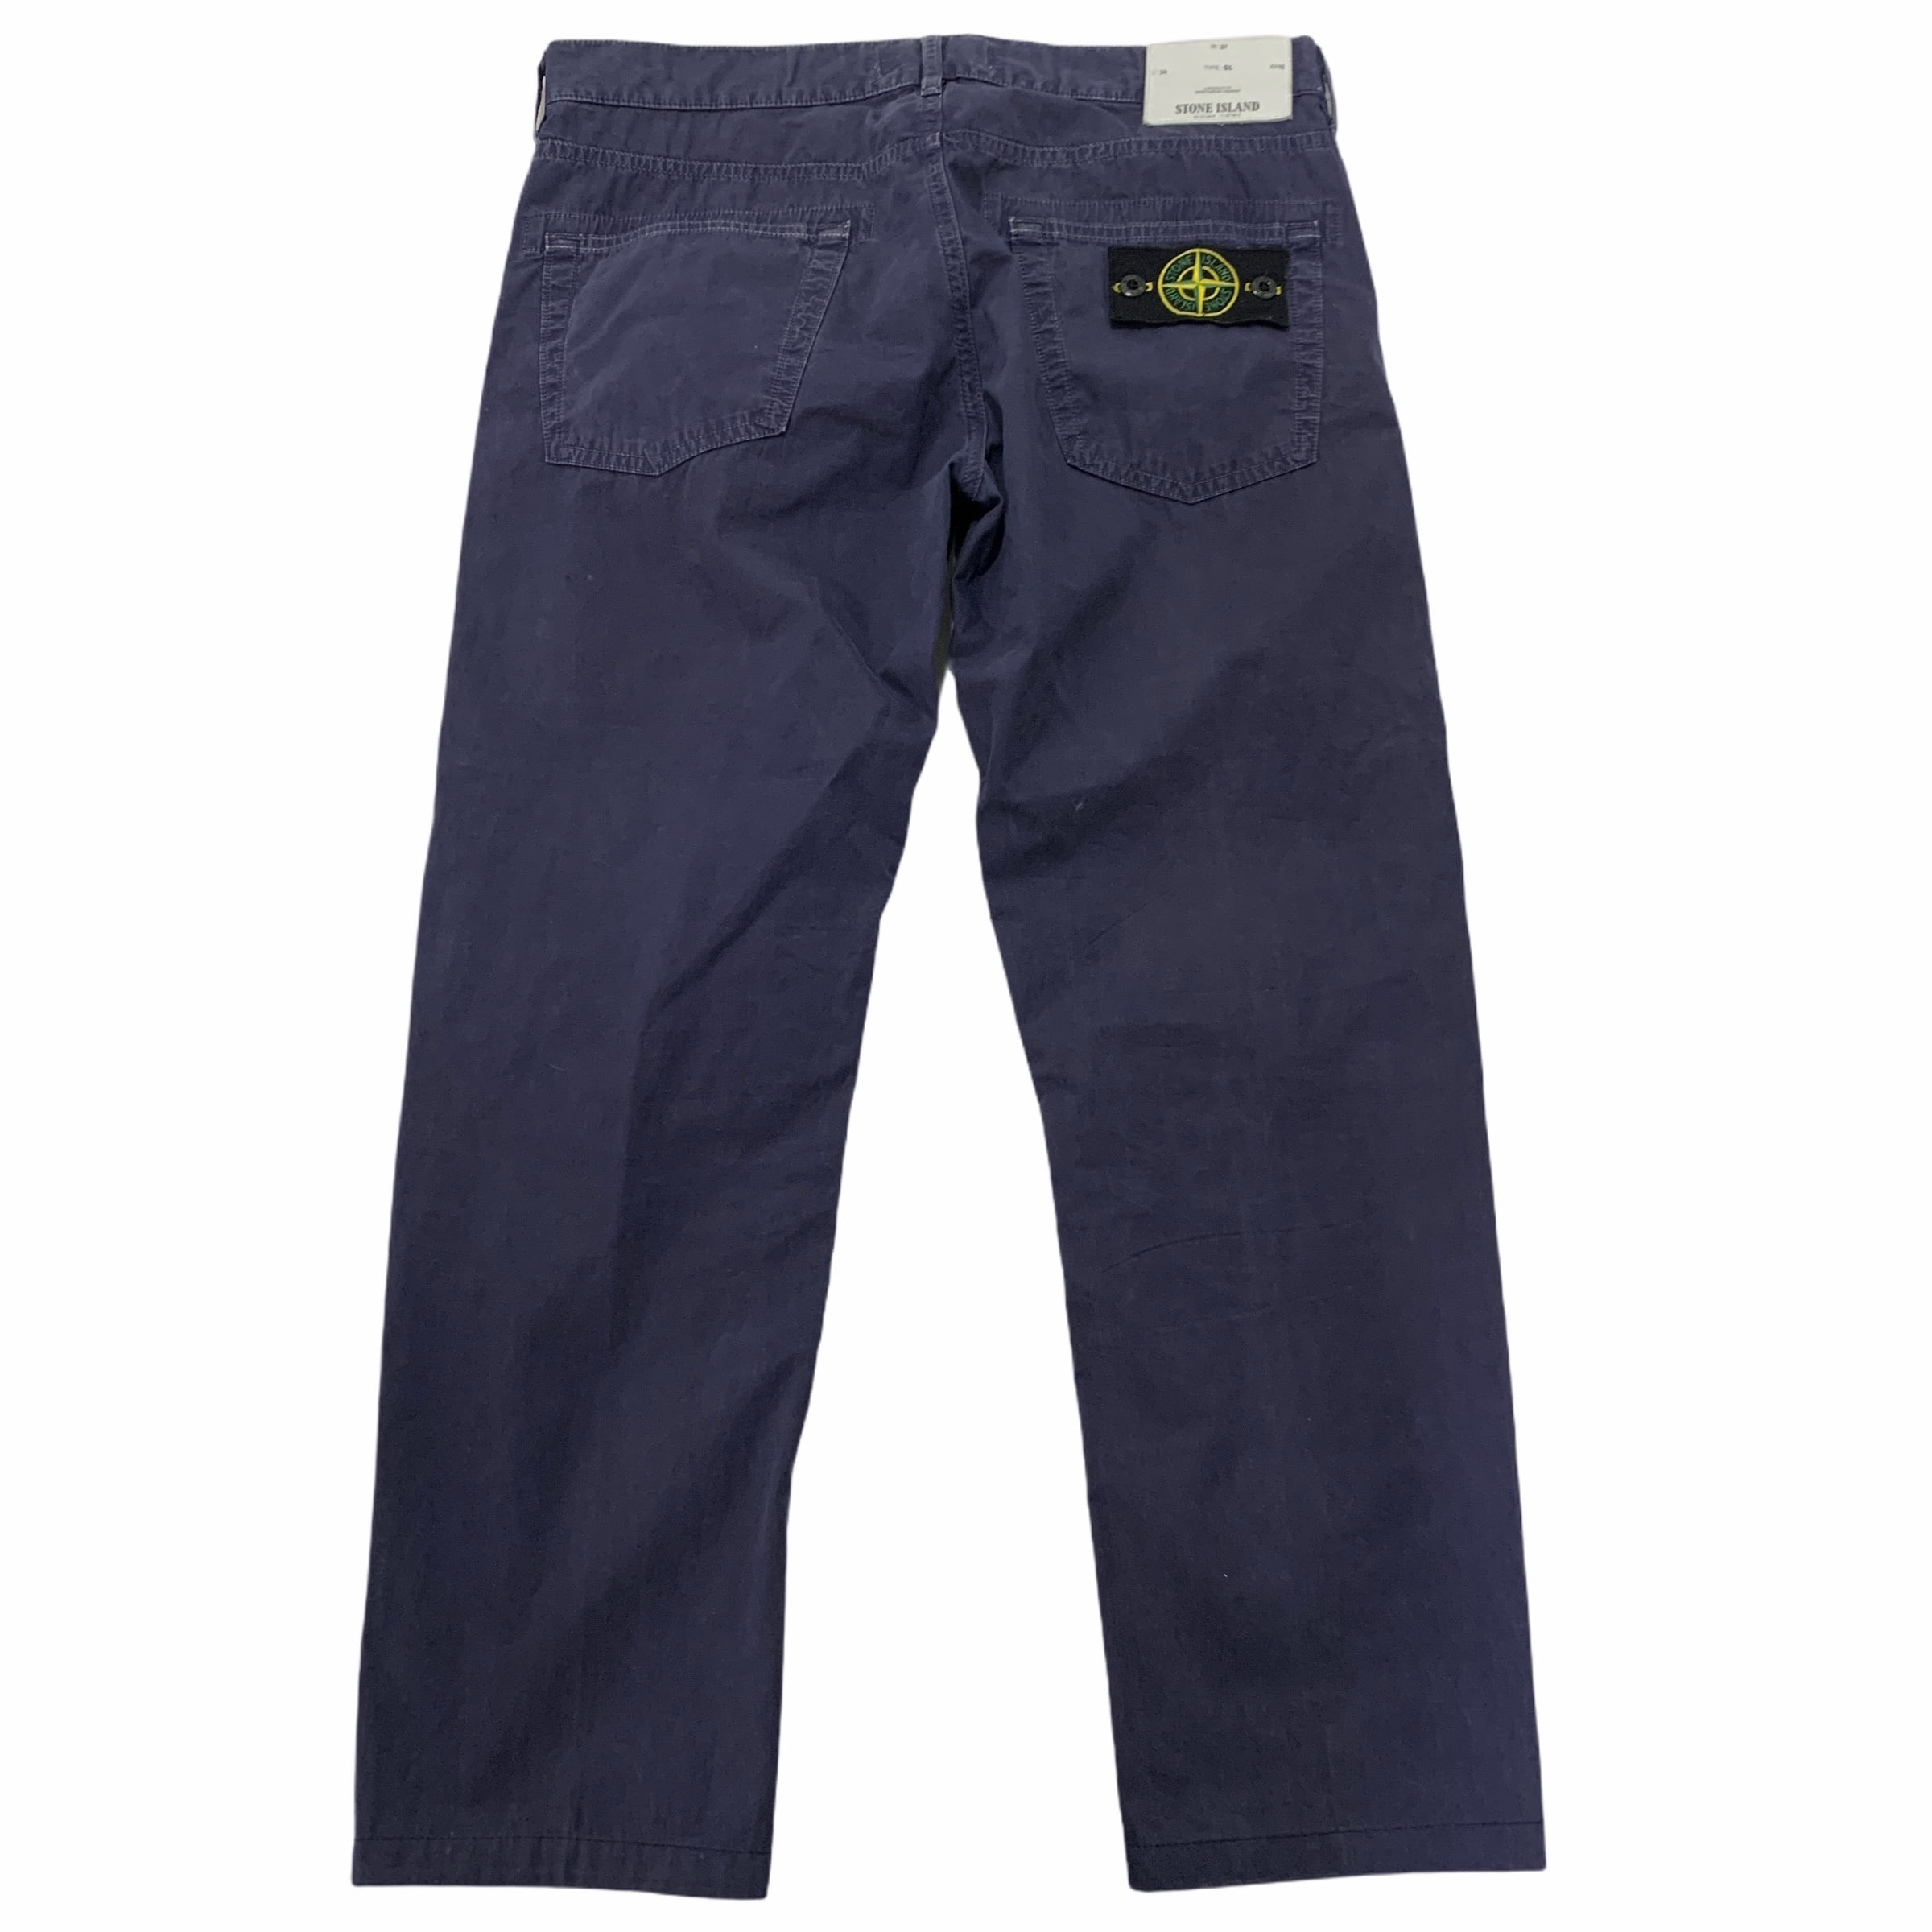 [Stone island] Slim Fit Cotton Pants NY - Size 32